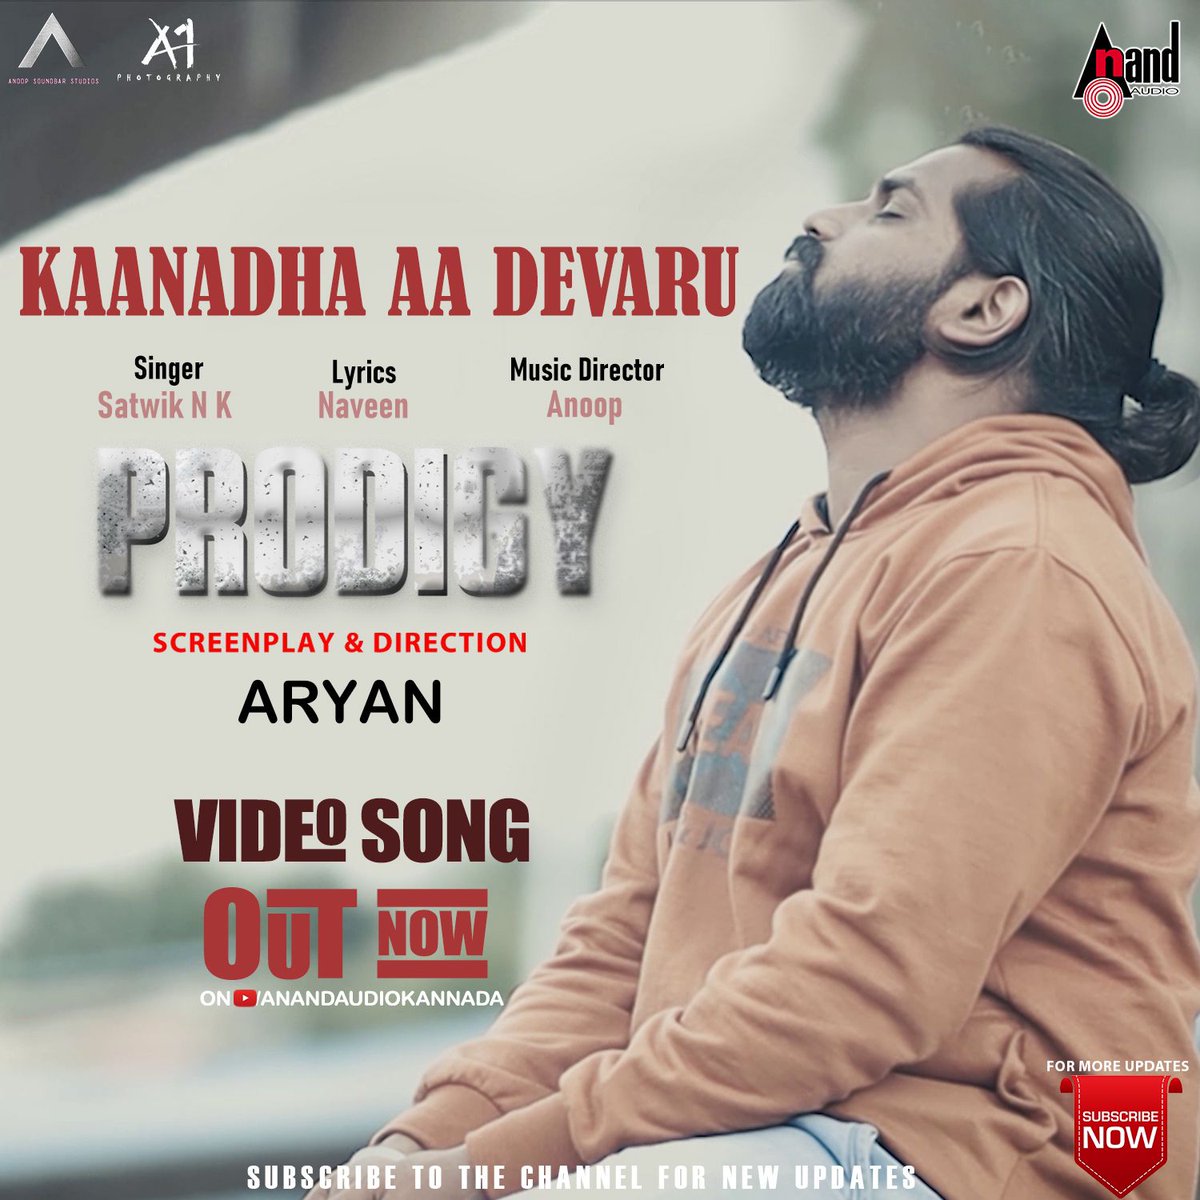 Watch HD Video Song Kaanada Aa Devaru From The Short Film Prodigy, Exclusive Only On Anand Audio Kannada Youtube Channel..!!! youtu.be/zA48U_Qdig4 #Prodigy #ProdigyShortFilm #AnandRaj #Srinidhi #AlluAkhilesh #SujanShetty #Manoj #Aryan #anandaudiokannada #SatwikNK